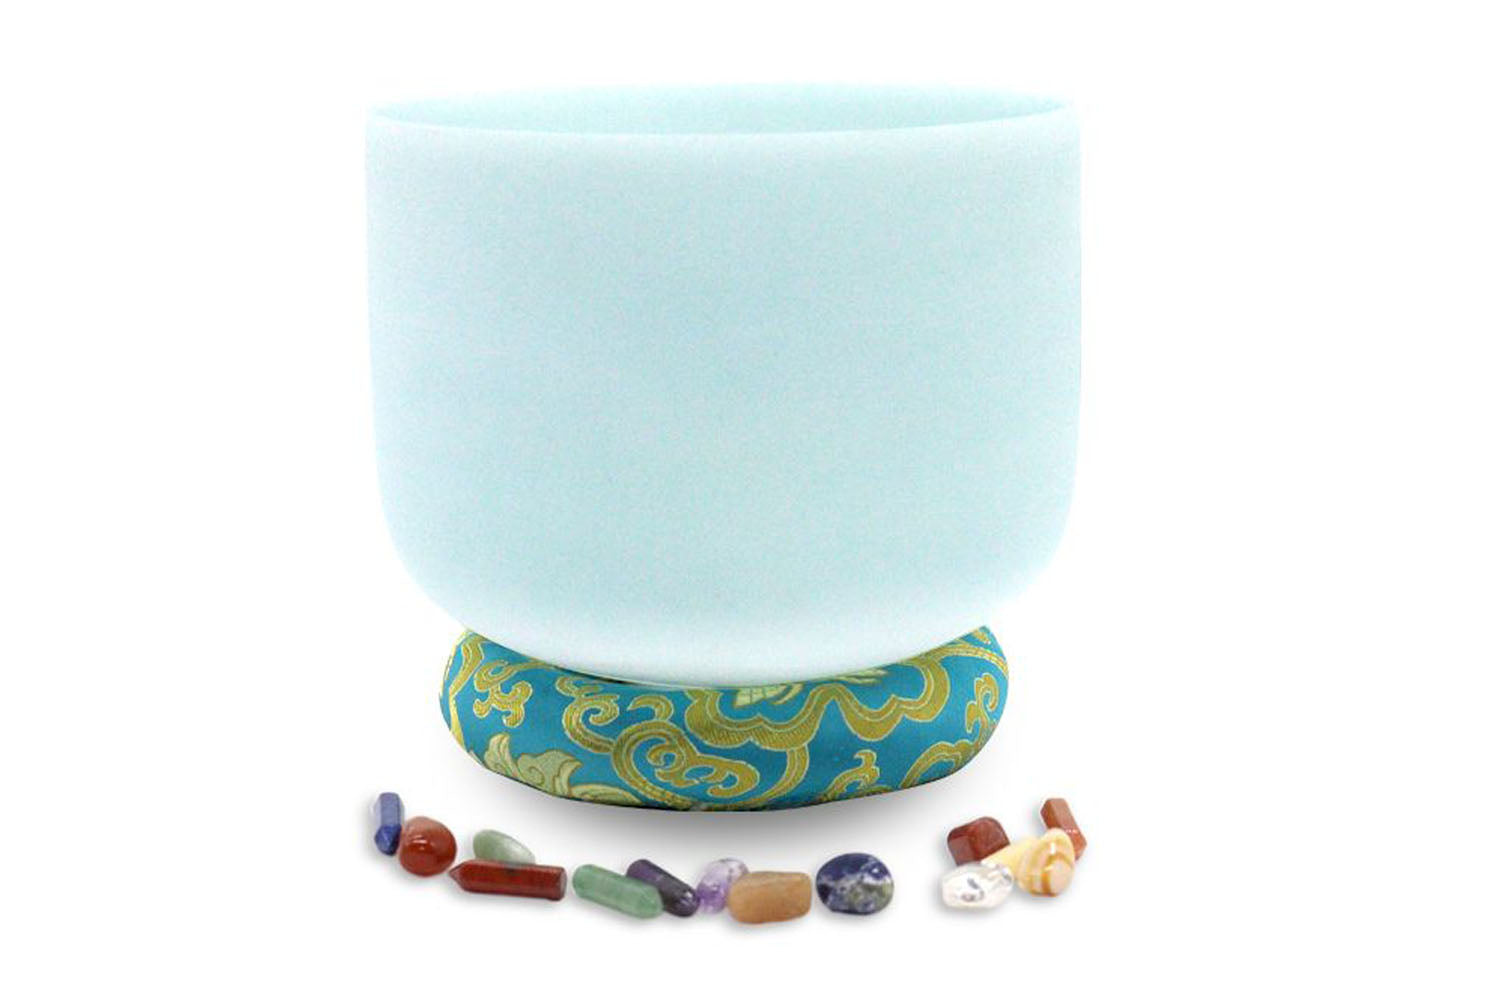 Original Stone Ground Quartz Crystal Singing Bowl CCB-003 - Yoga Meditation Instruments